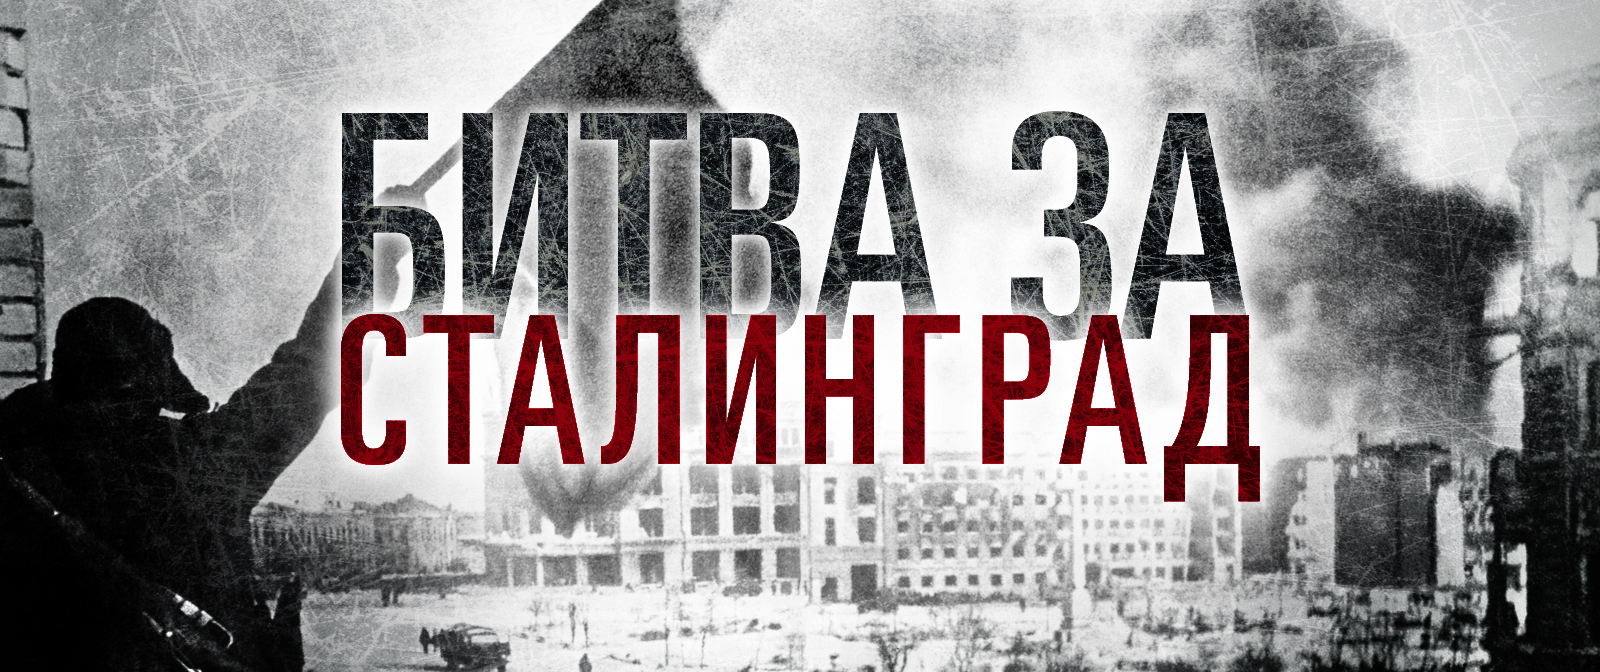 Фото битва за сталинград с надписью